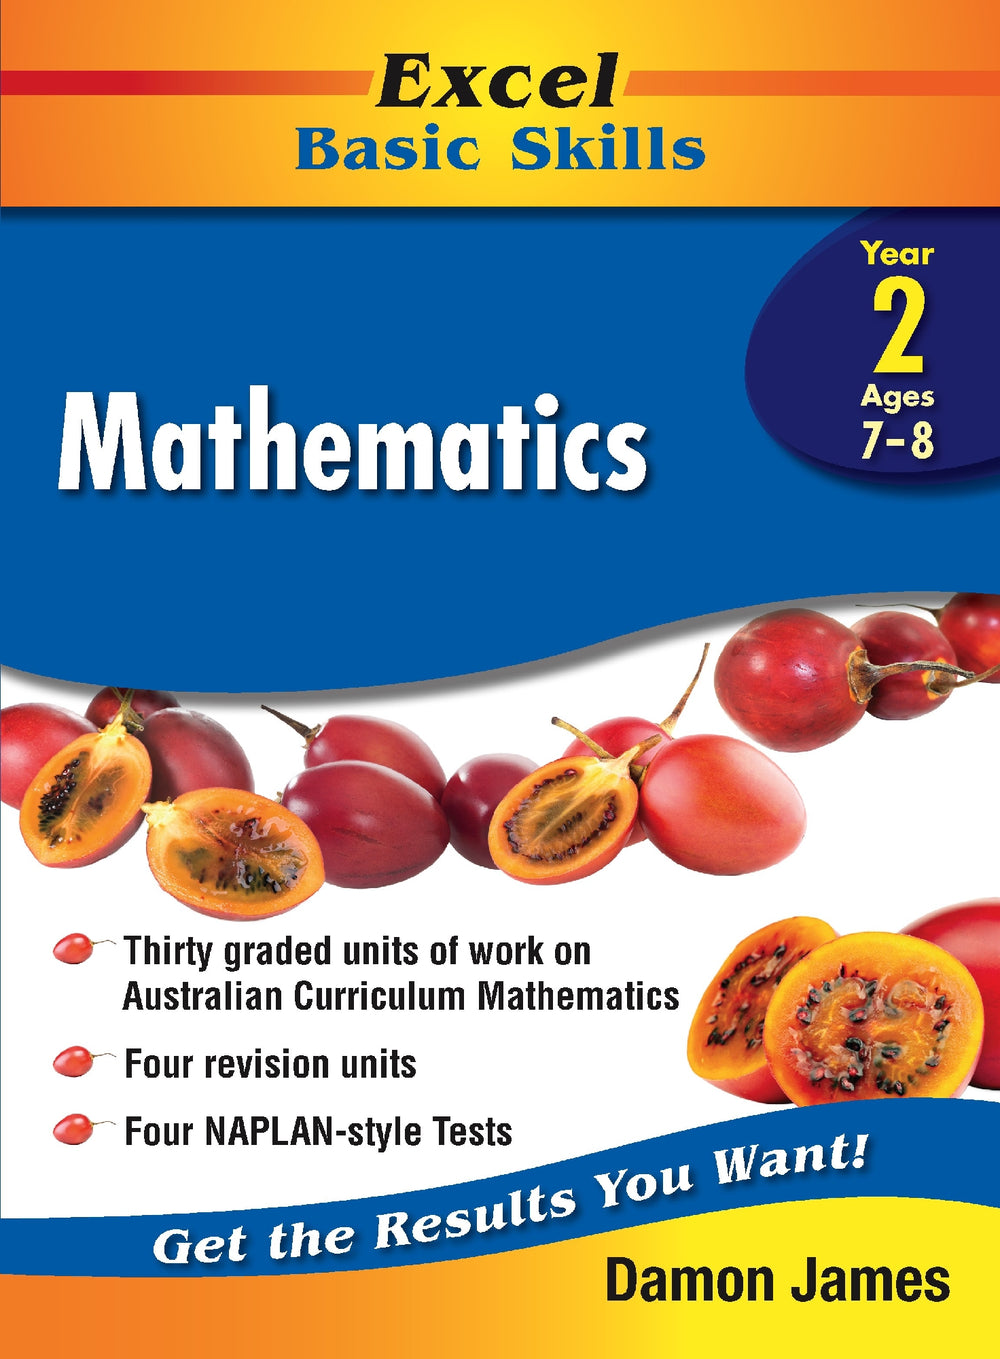 Excel Basic Skills Workbook: Mathematics Year 2